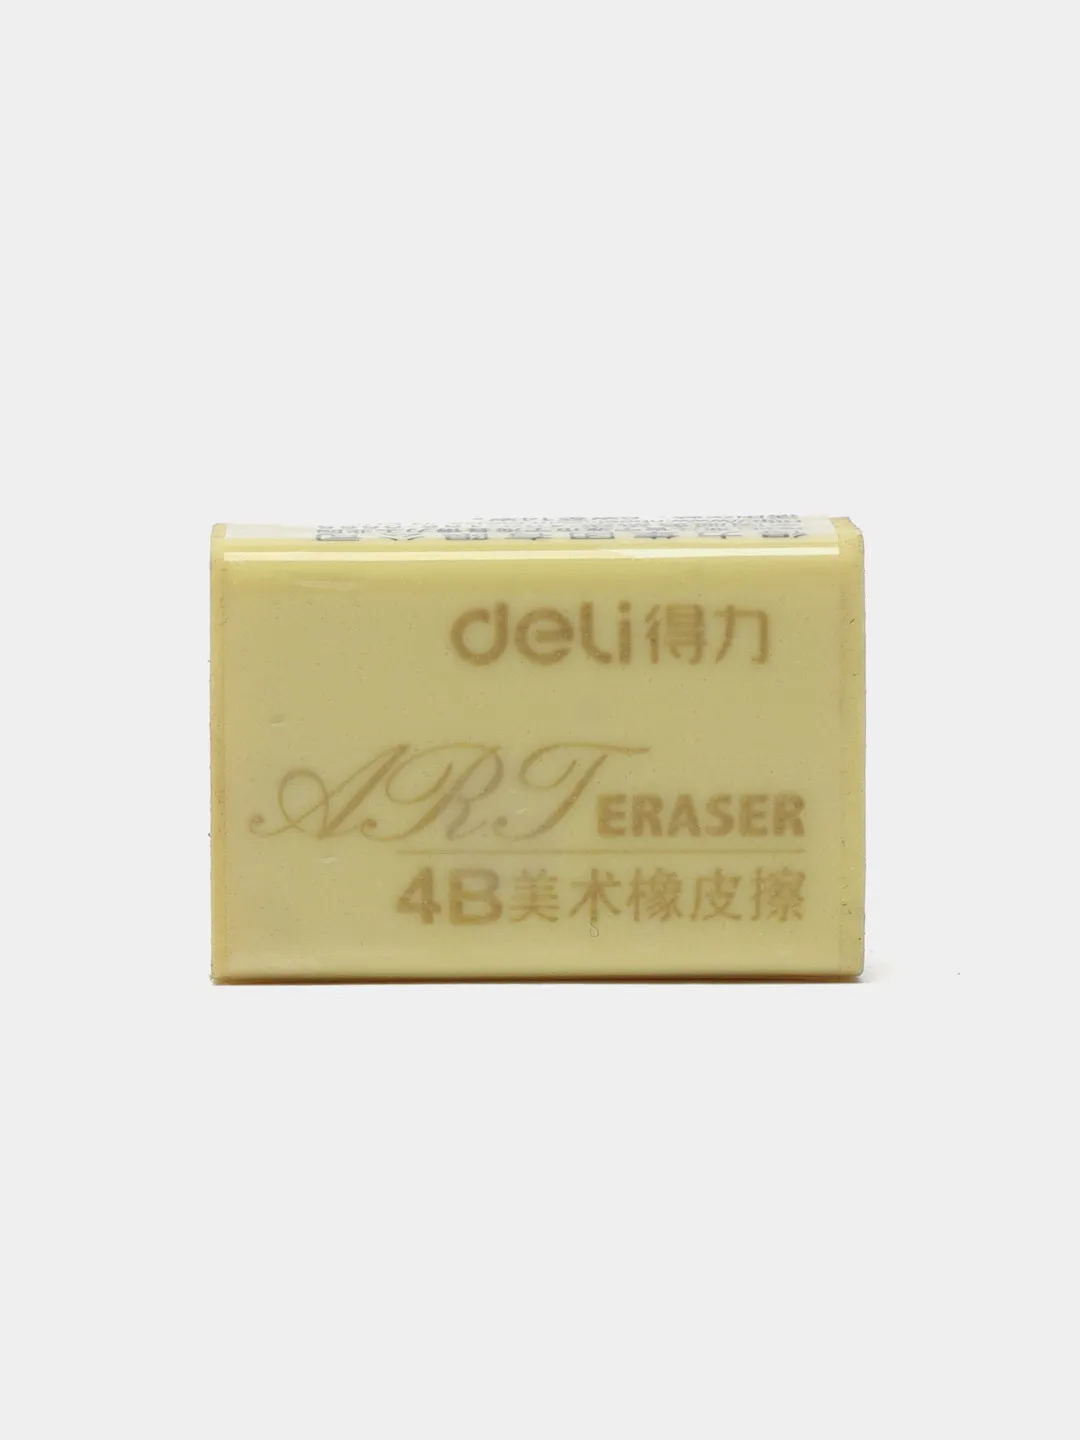 Eraser 7534 Deli#1